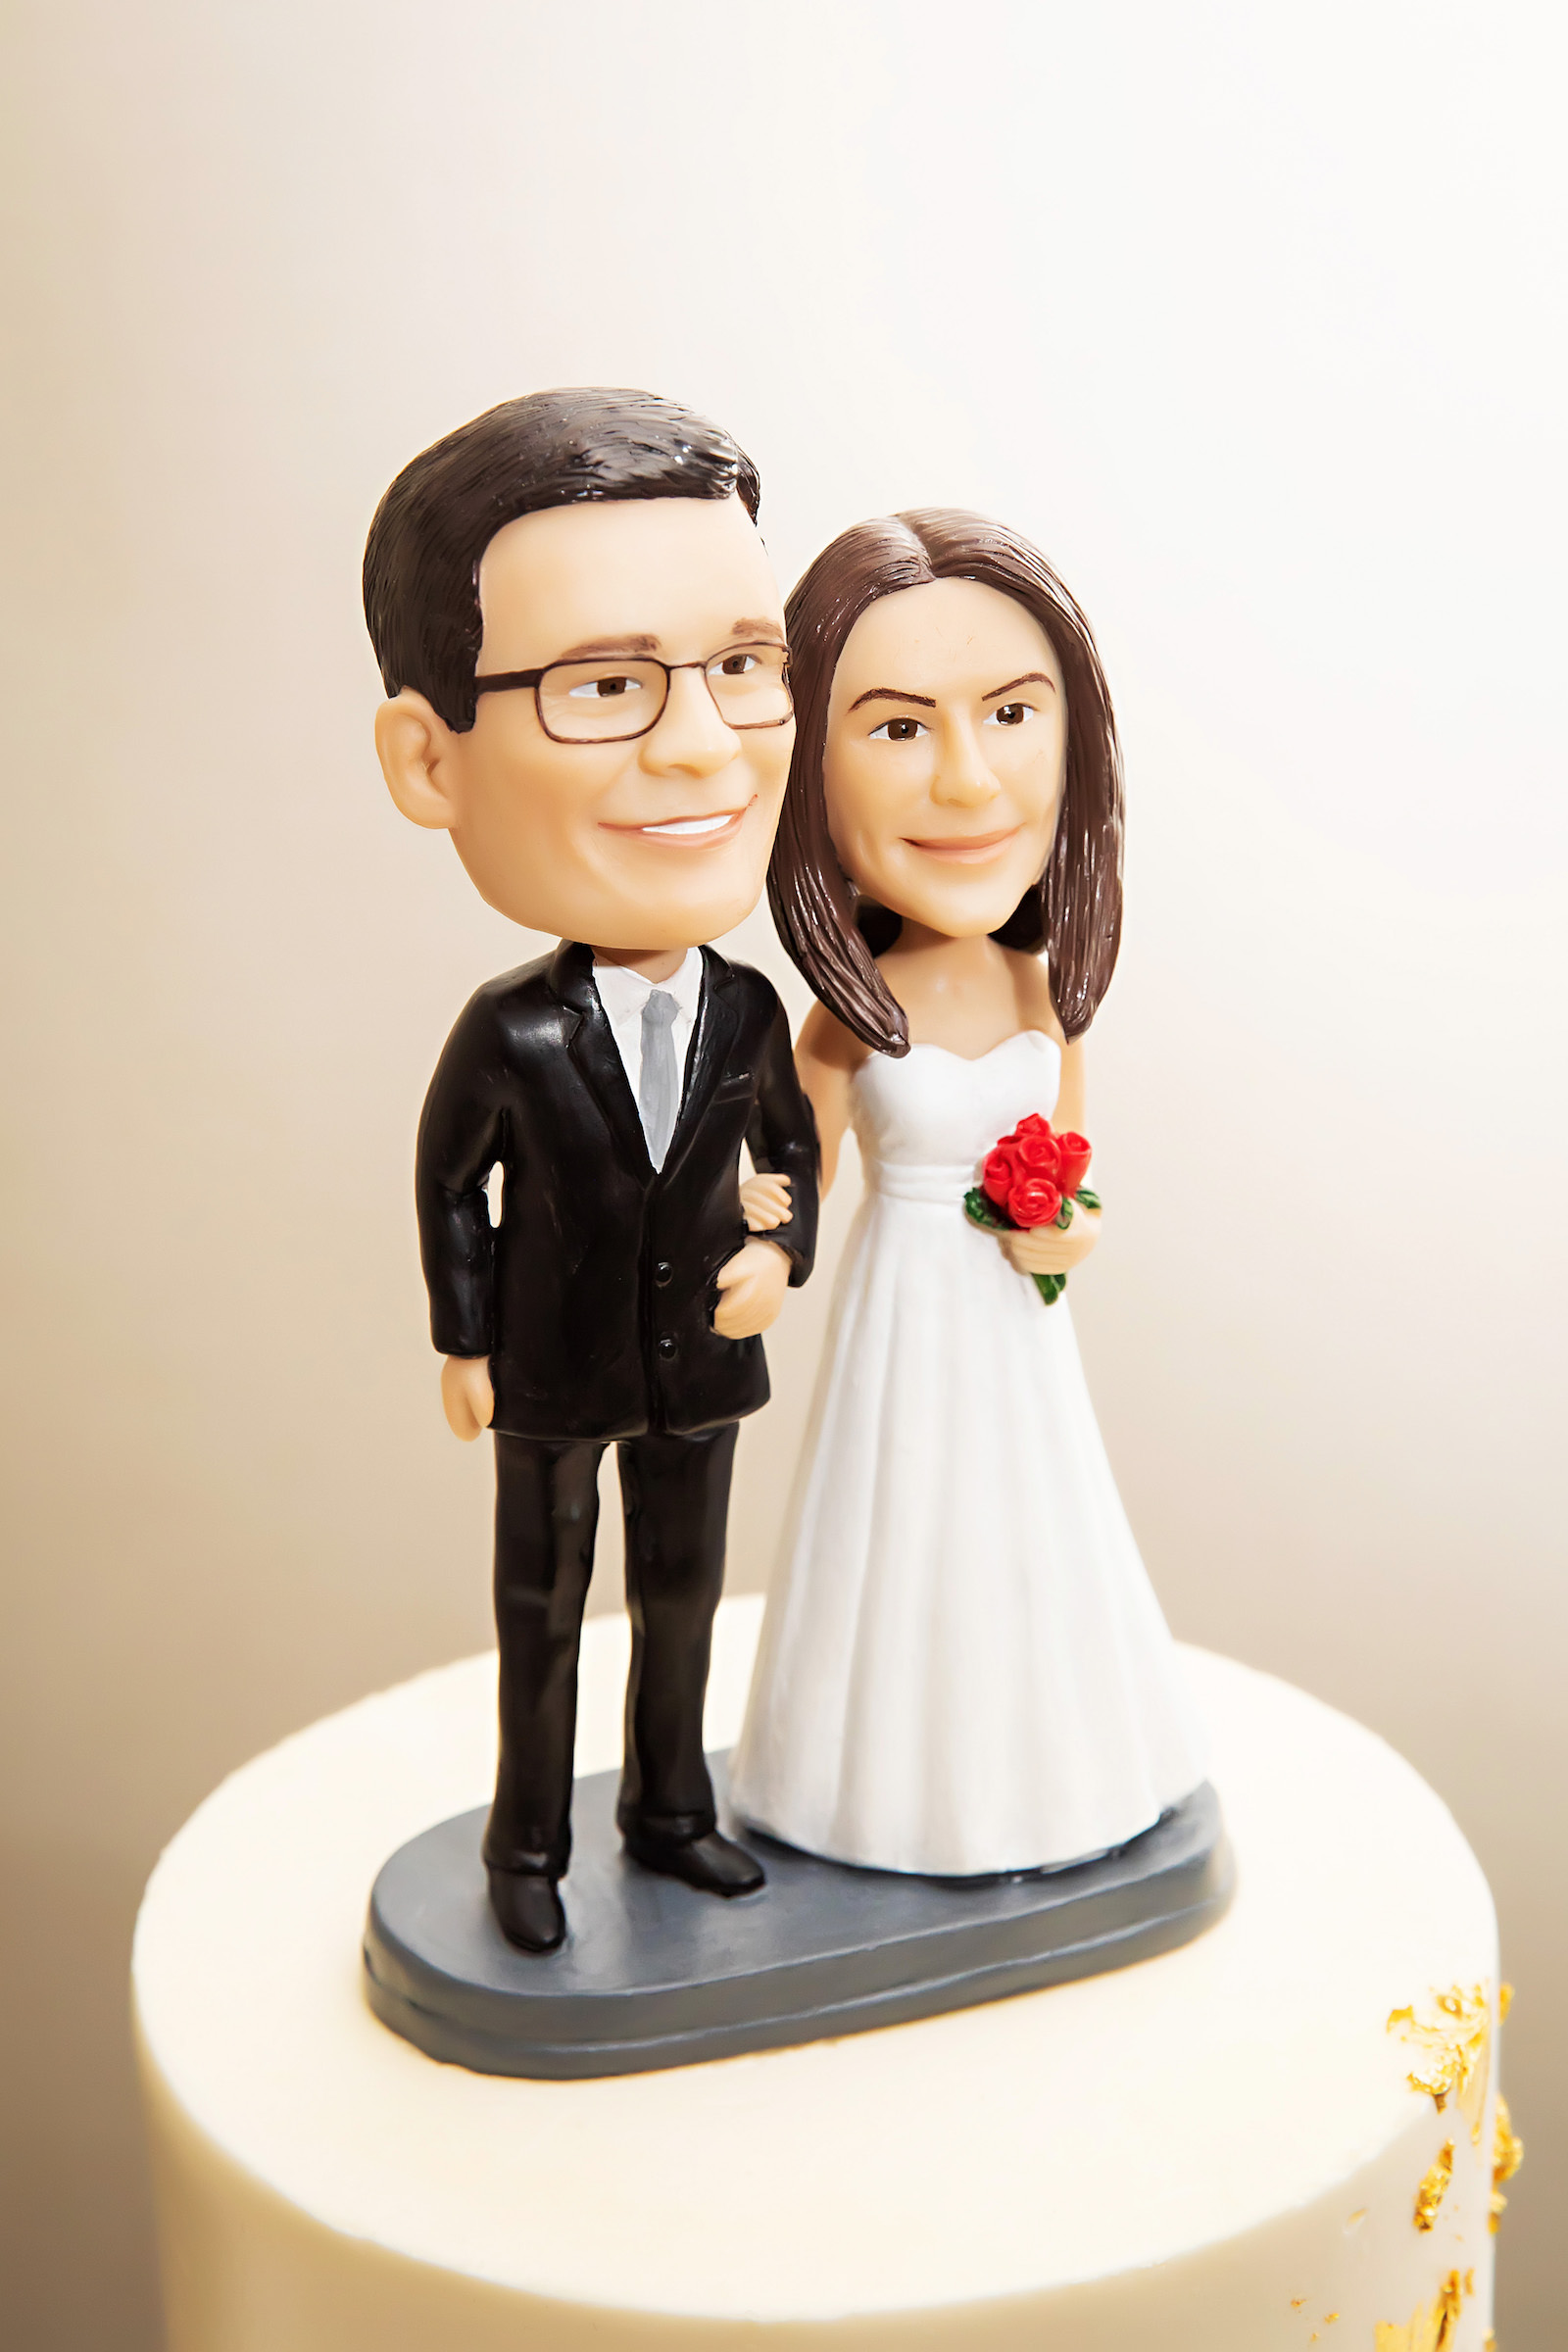 Bobble Head Wedding Cake Toppers | Florida Wedding Baker The Artistic Whisk